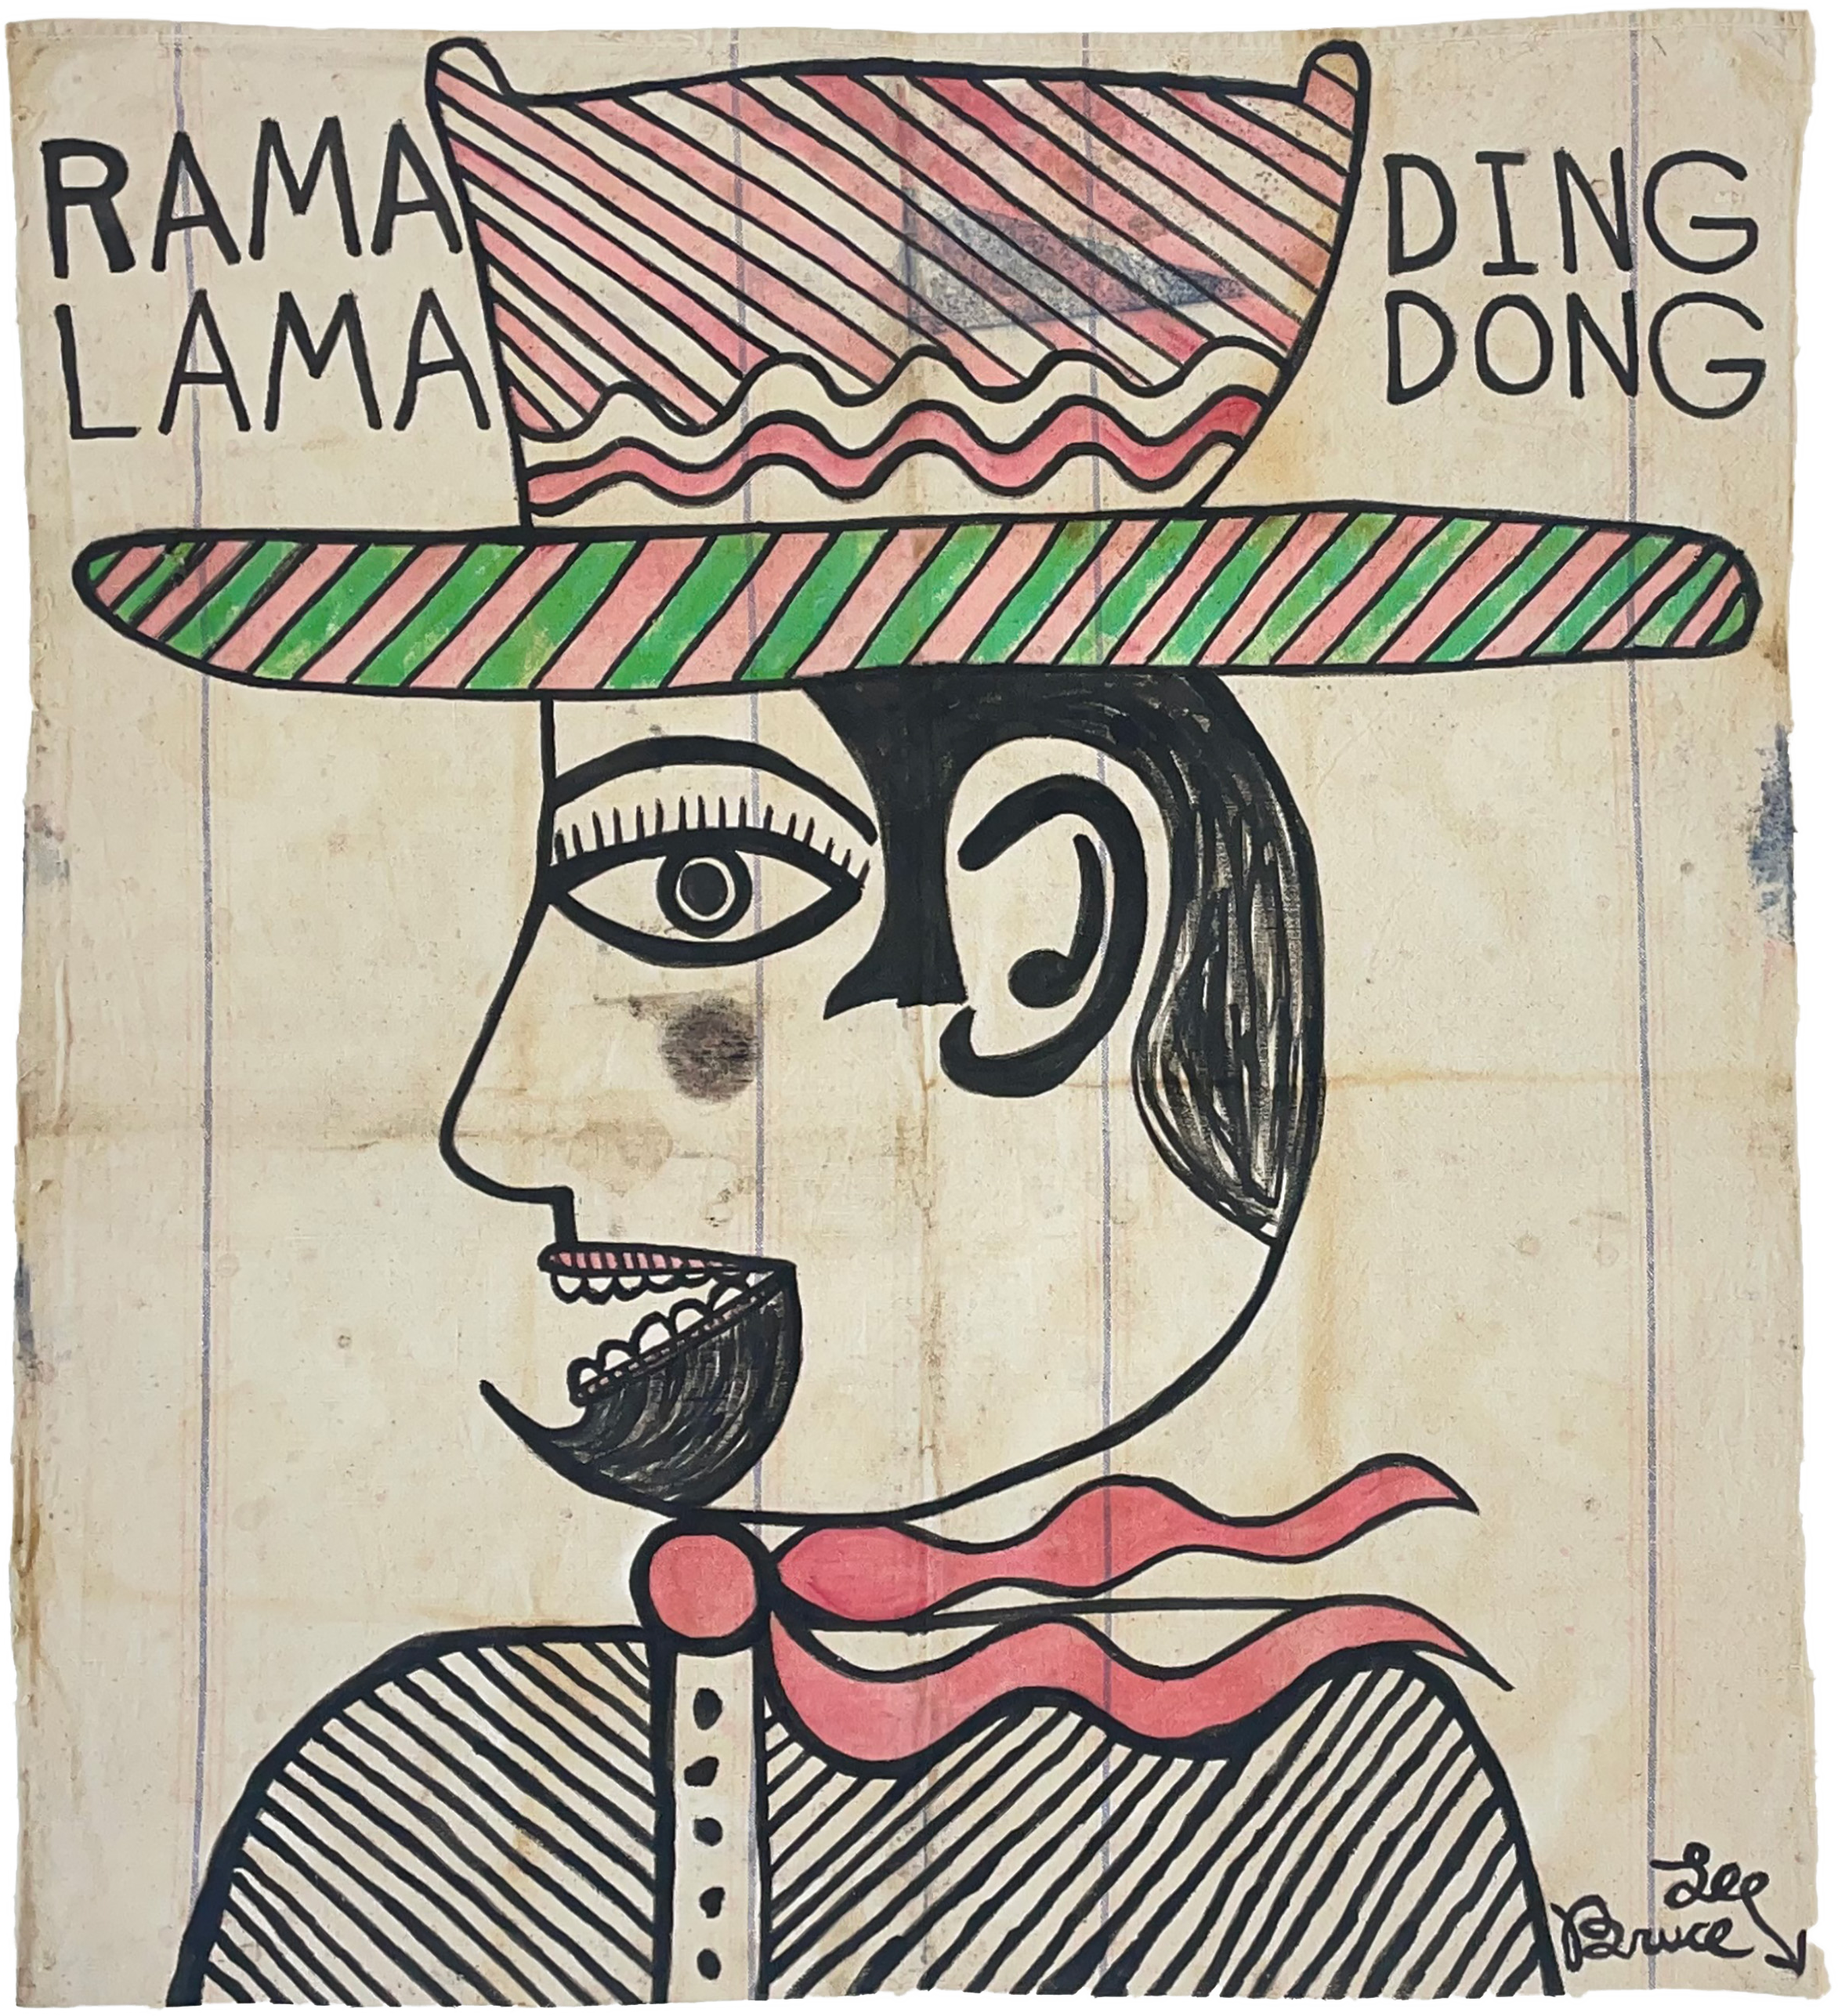 Ramalamading dong